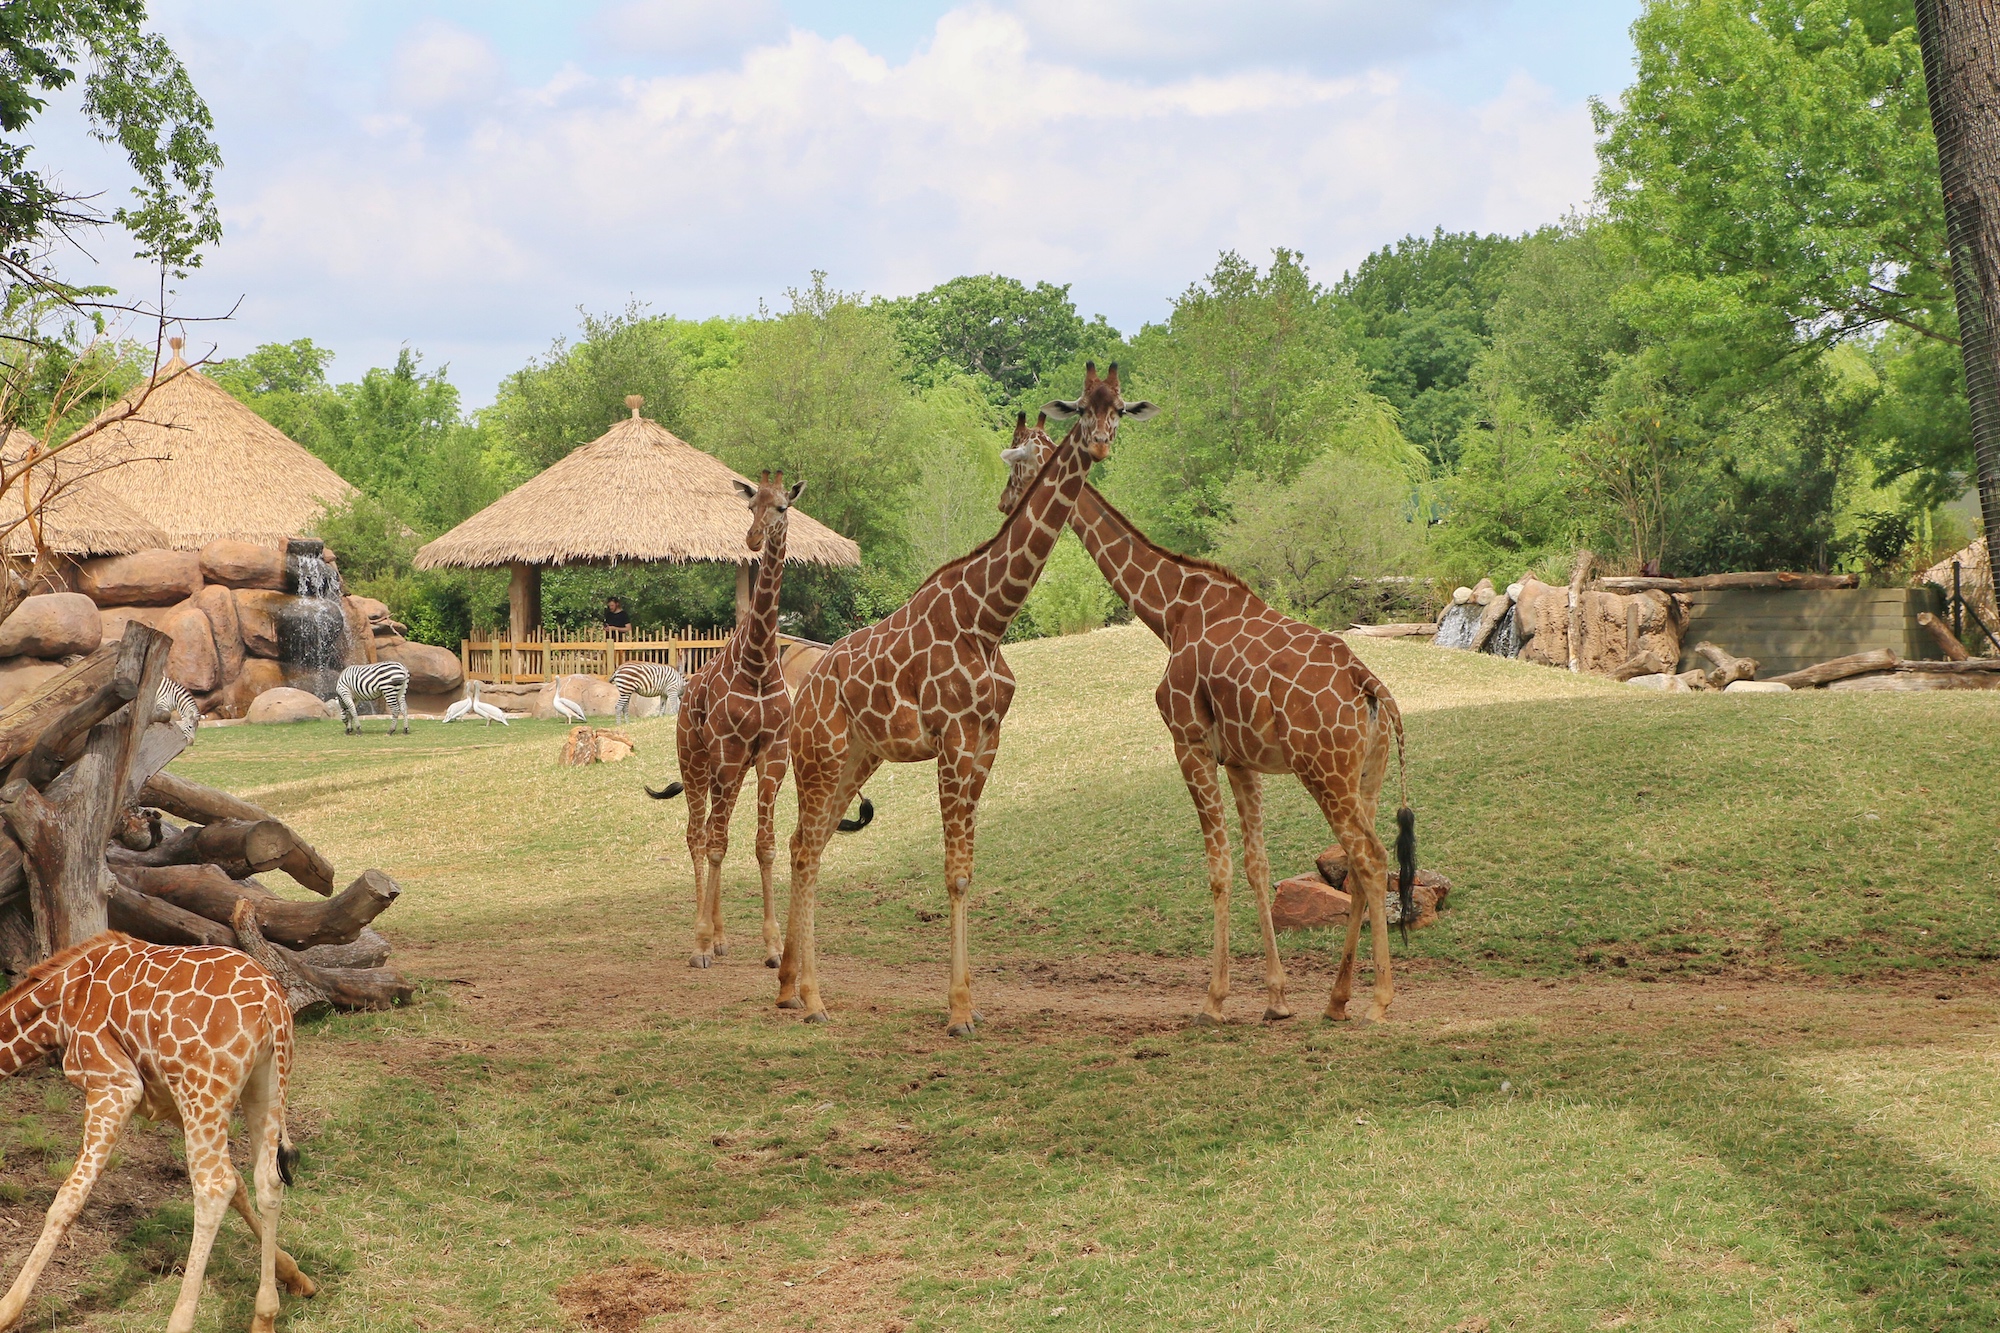 giraffe habitat at Fort Worth zoo